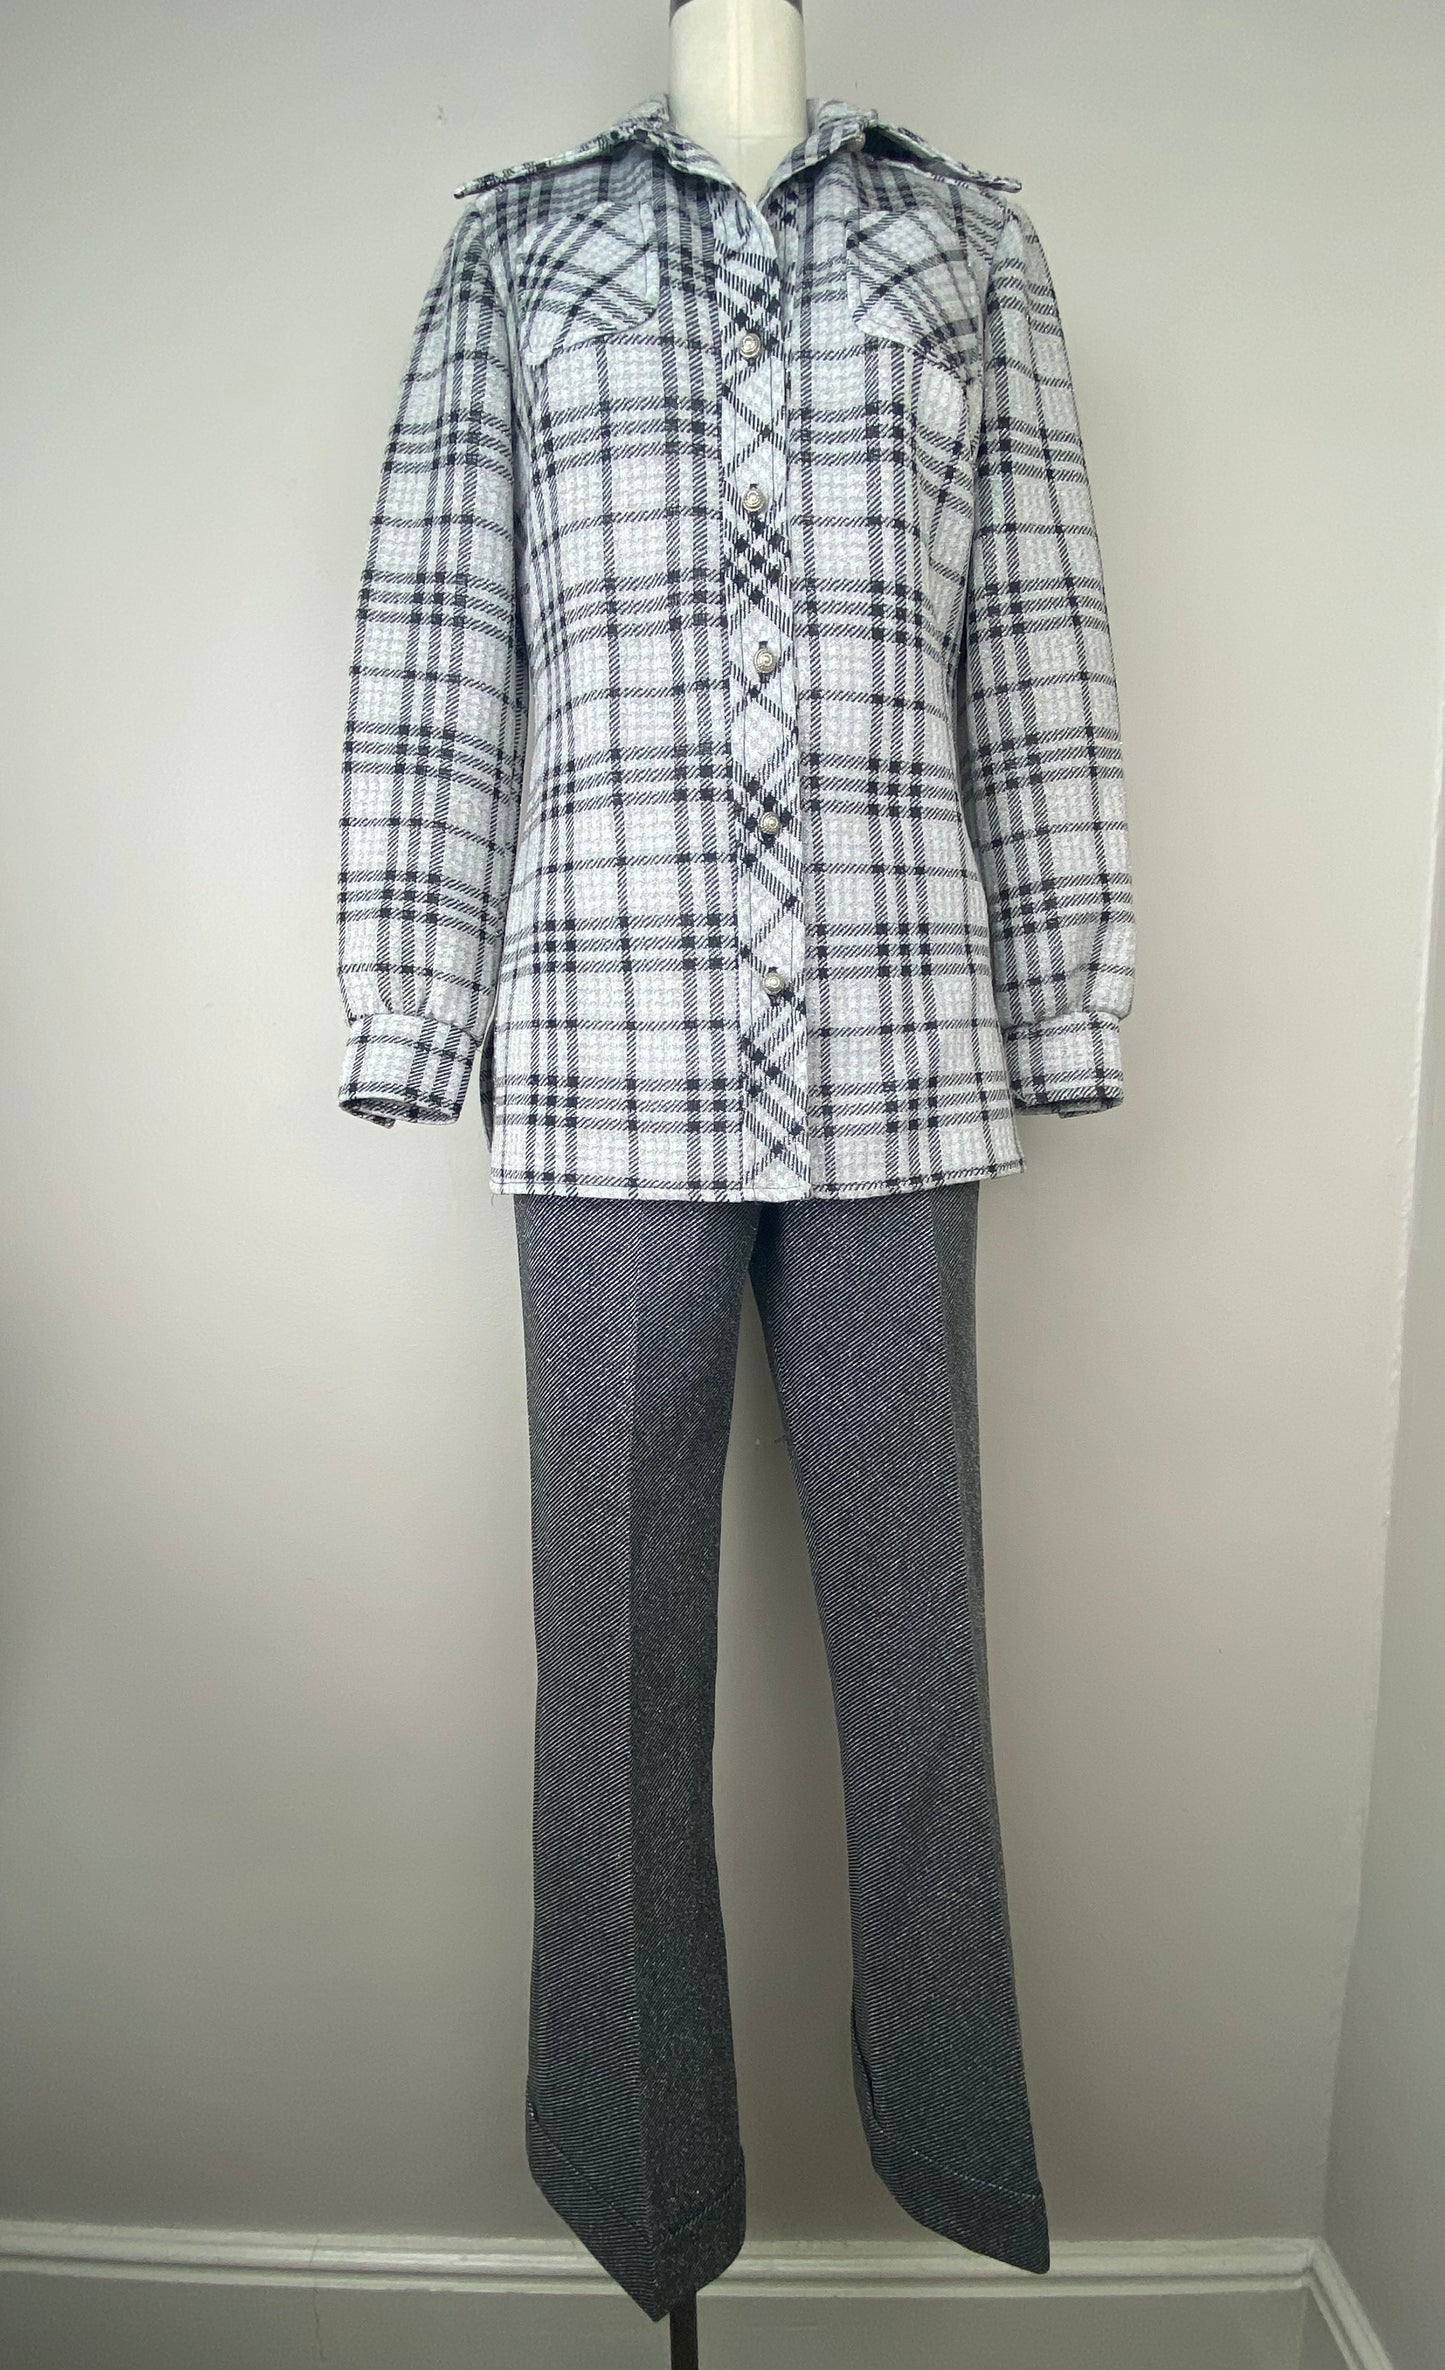 1970s Lurex Leisure Suit, Tucker Knits, Black and Silver Plaid Shirt Jacket and Diagonal Stripe Flare Leg Pants